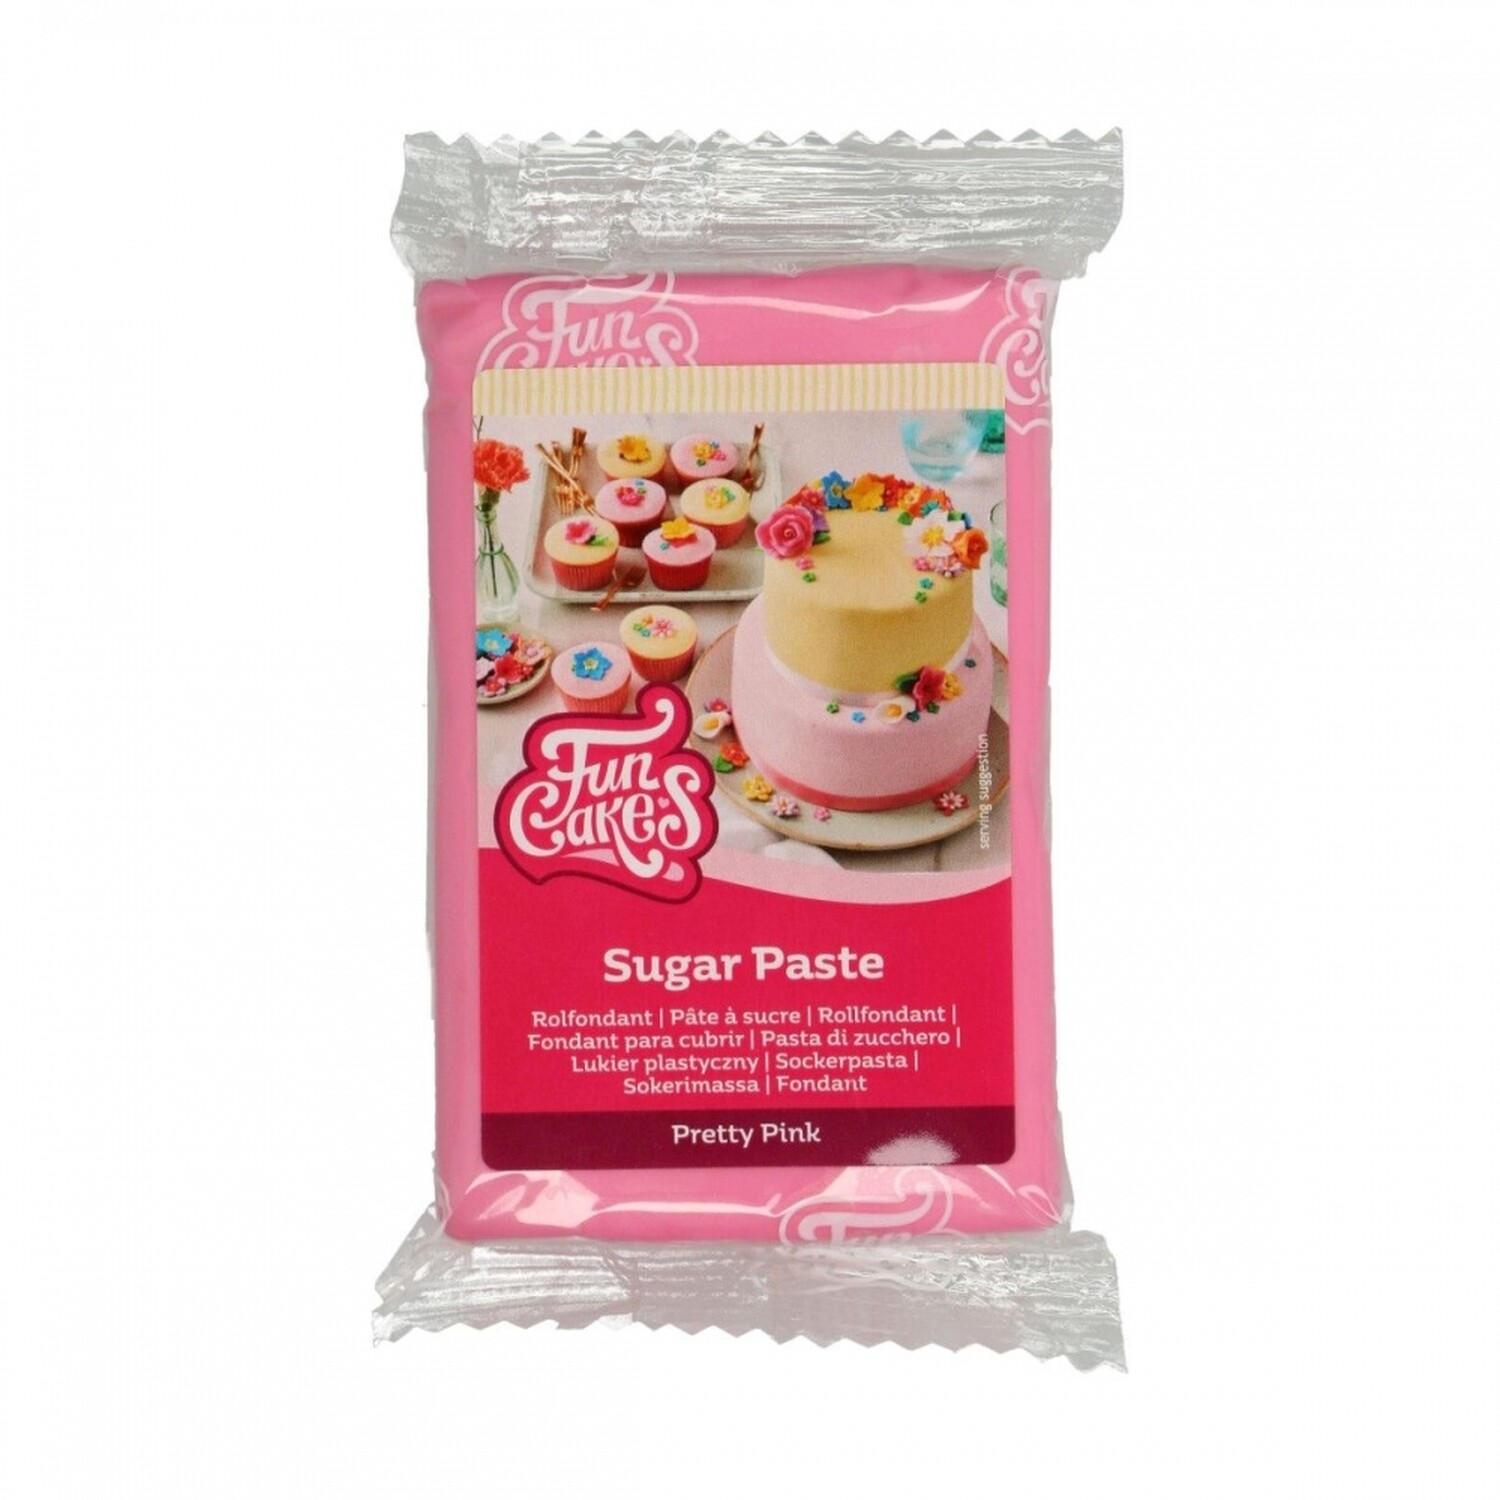 Funcakes Sugar Paste - Pretty Pink Image 1